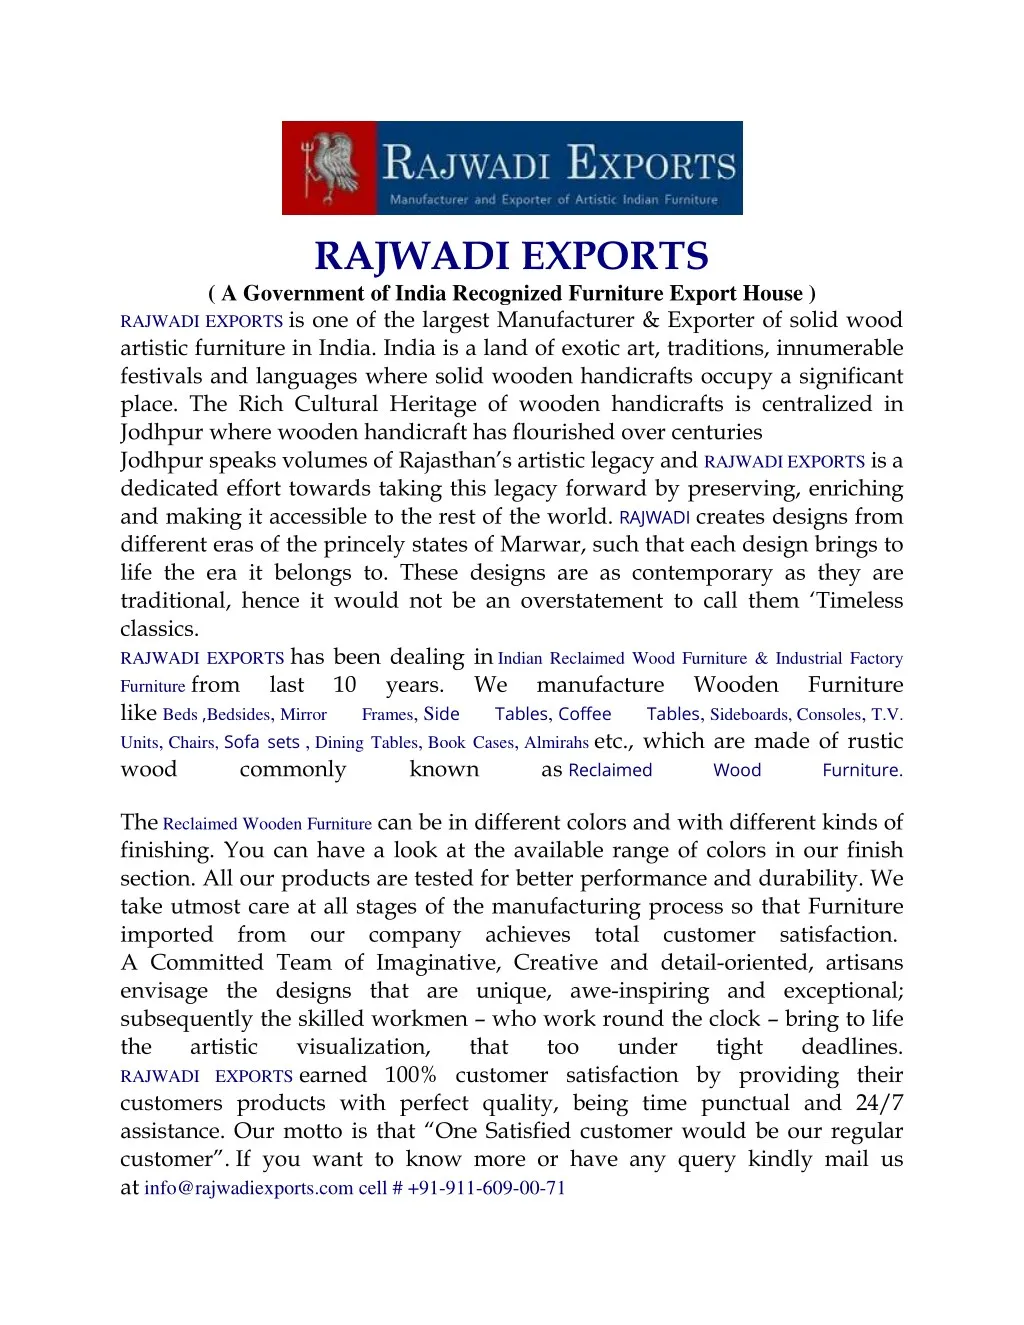 rajwadi exports a government of india recognized